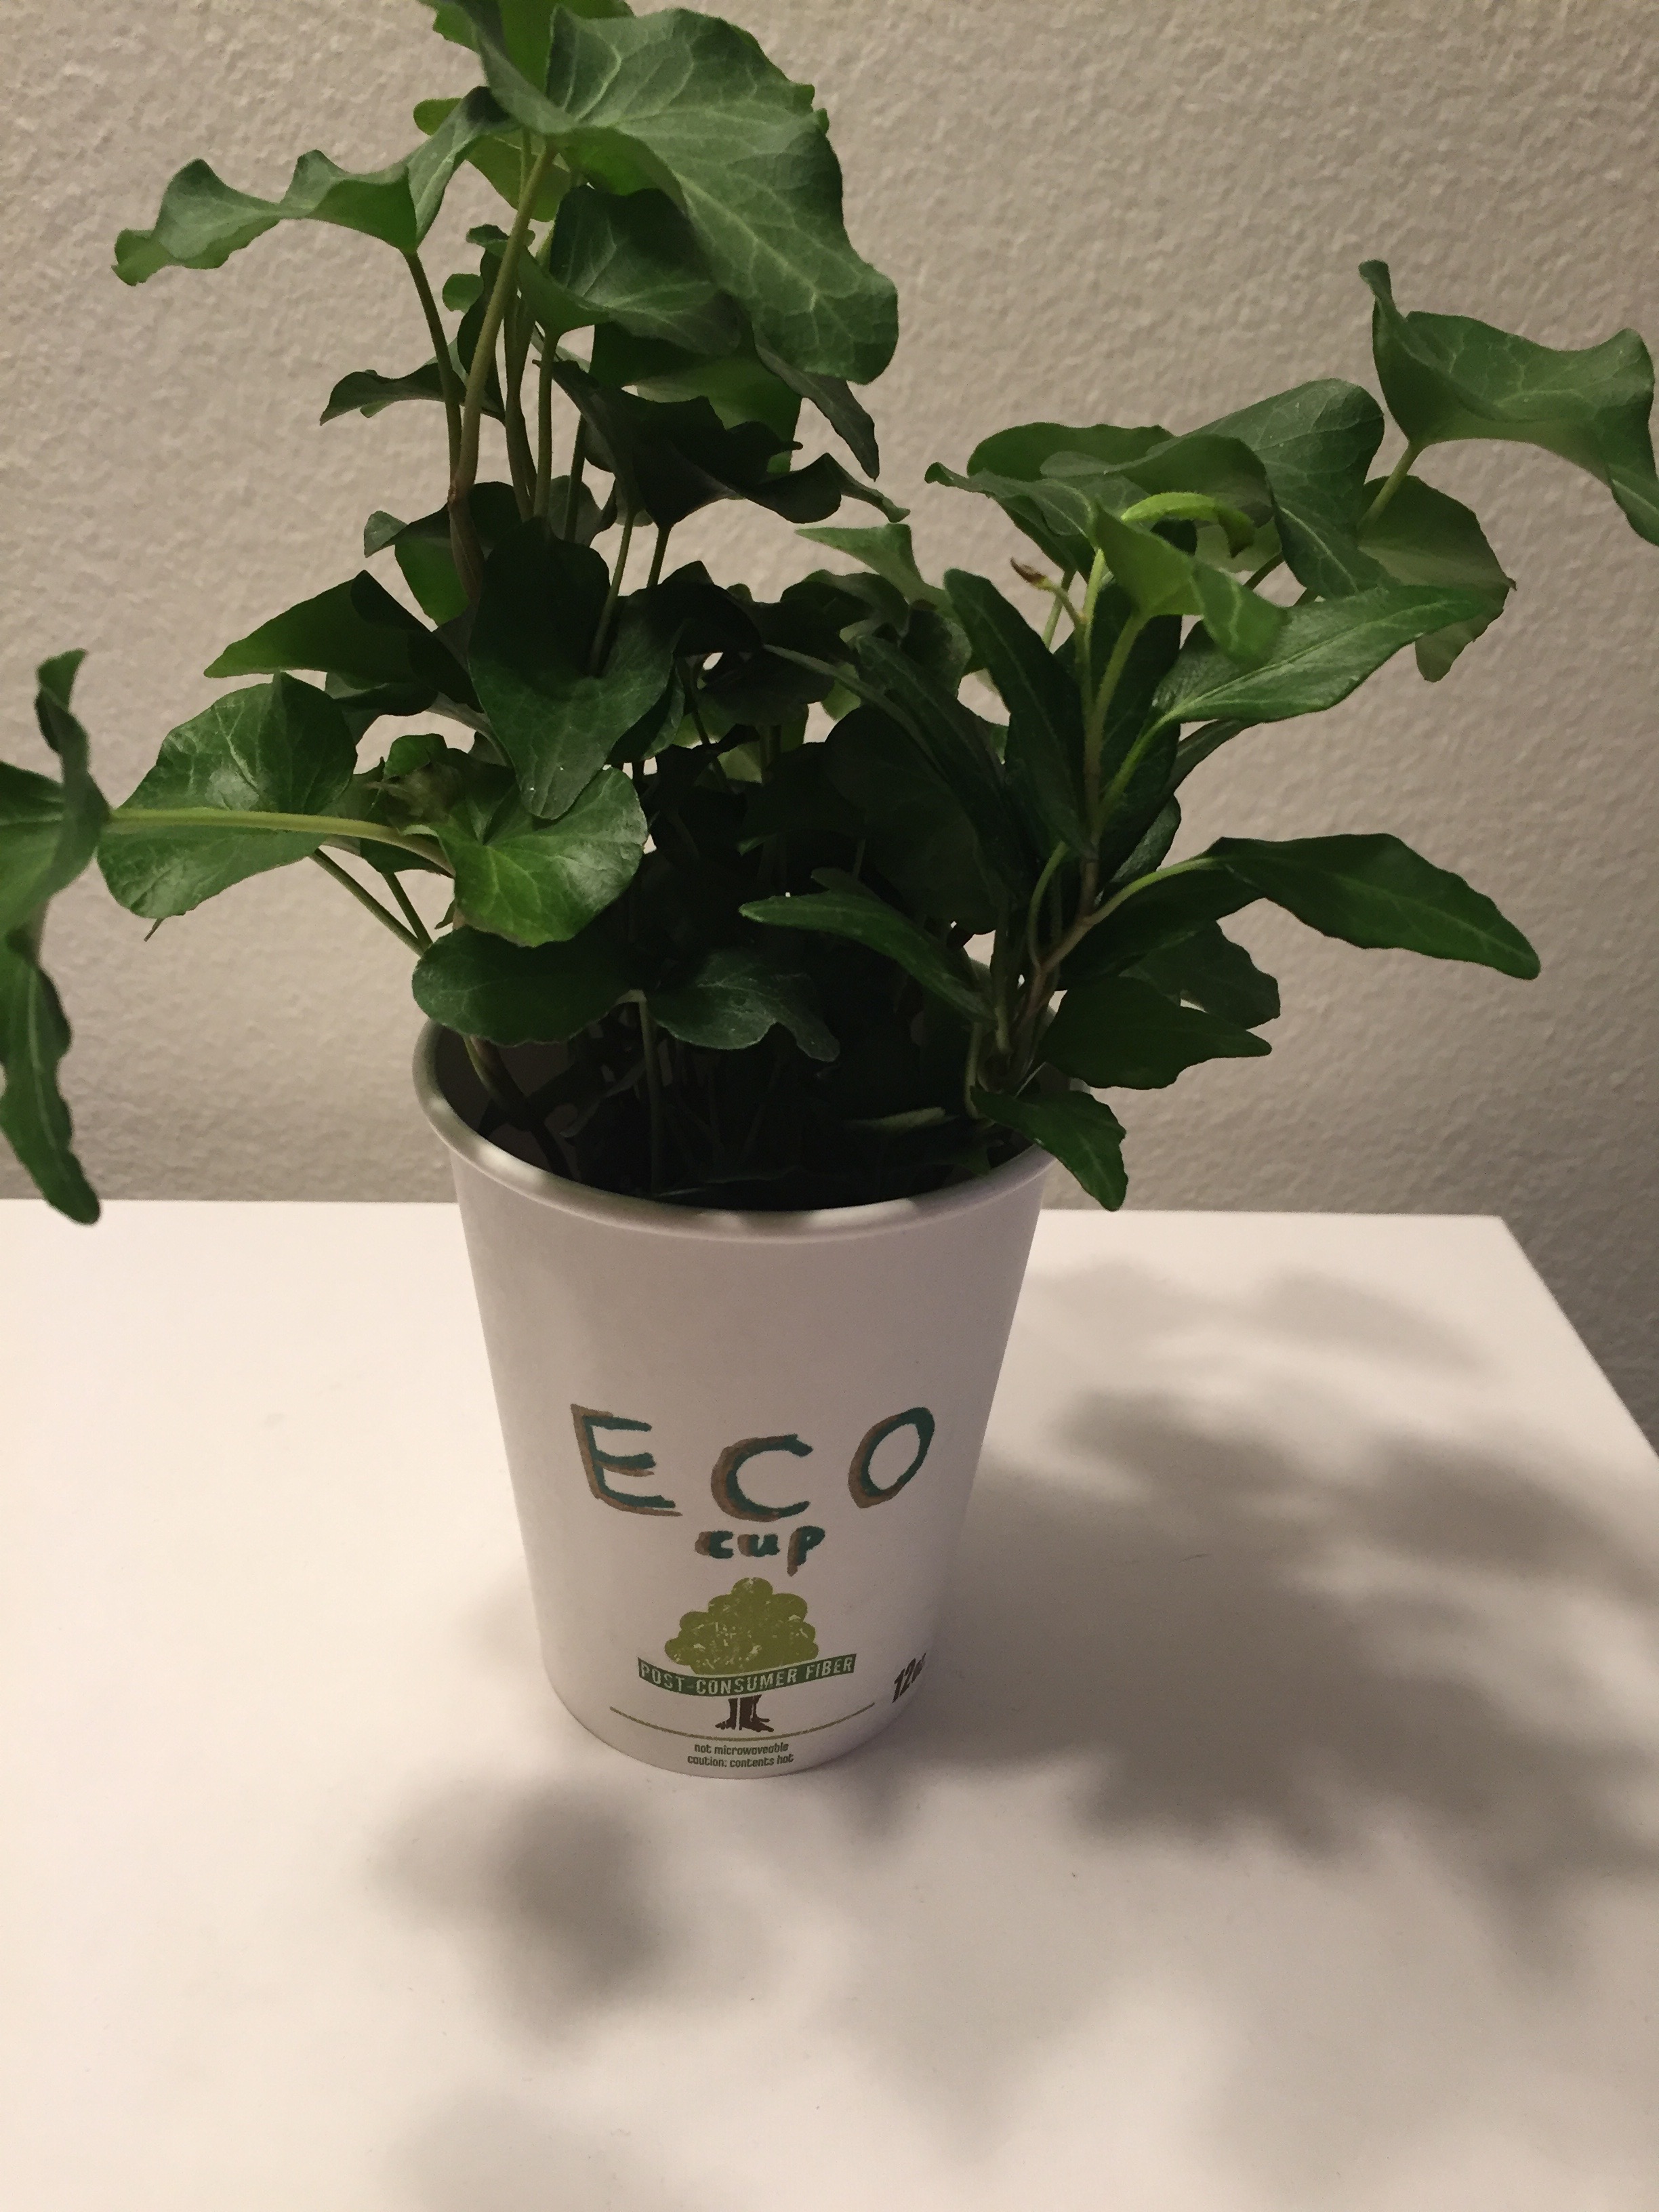 Studio 1 Final Project Eco cup